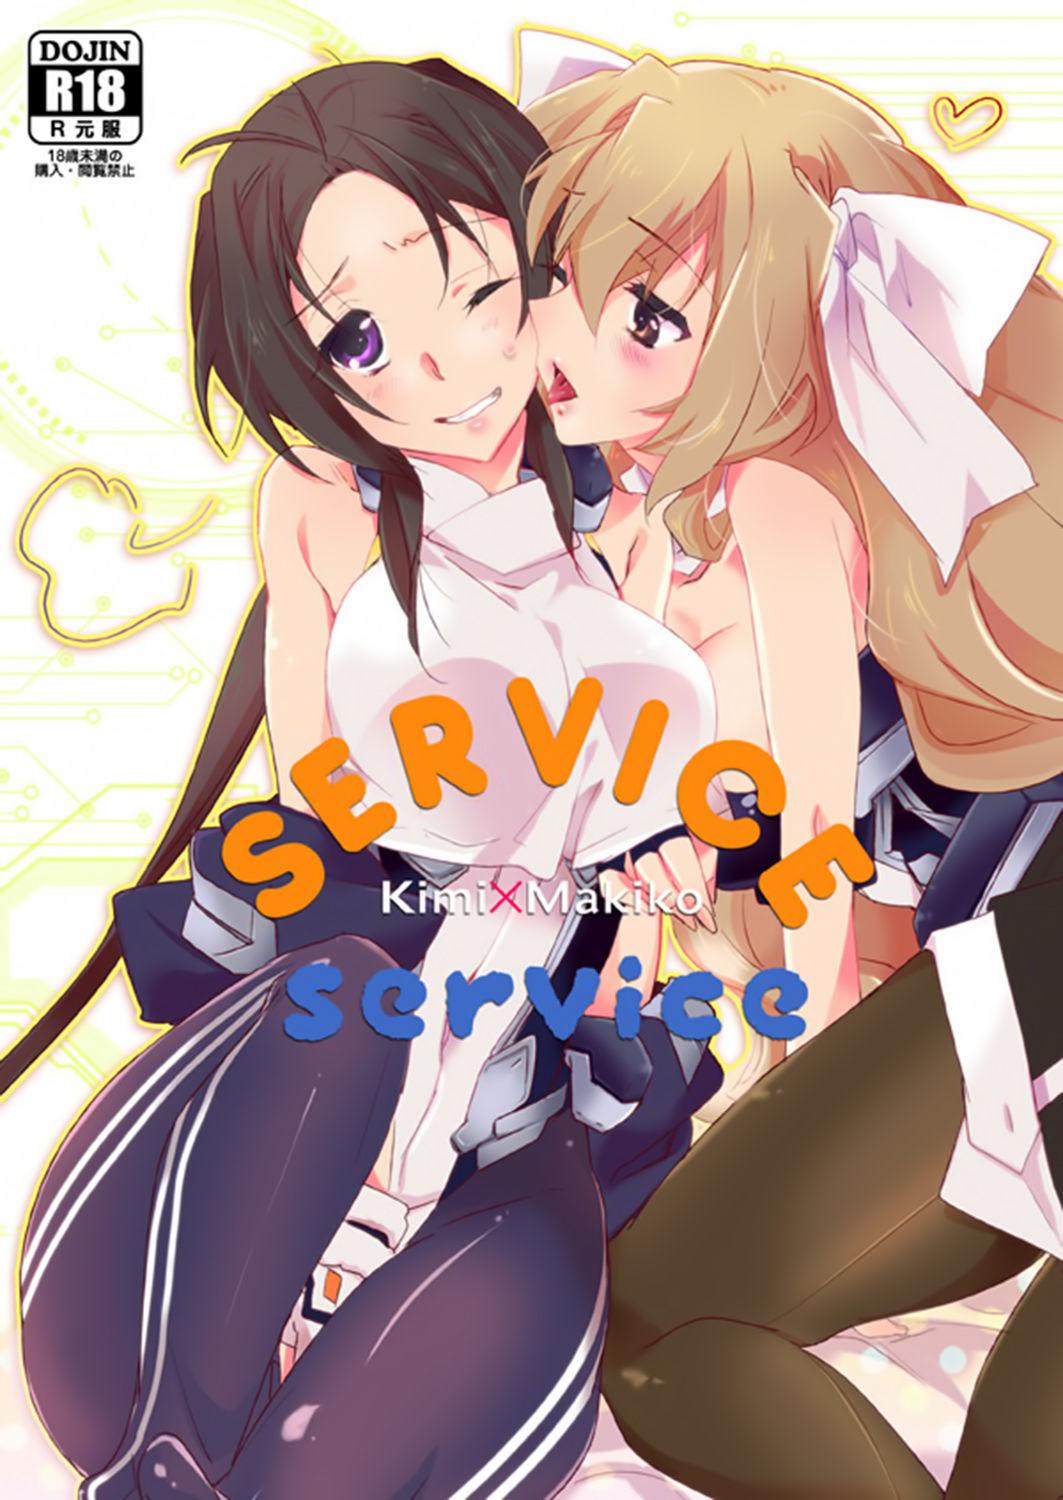 Inked SERVICE×SERVICE - Kyoukai senjou no horizon Pickup - Picture 2